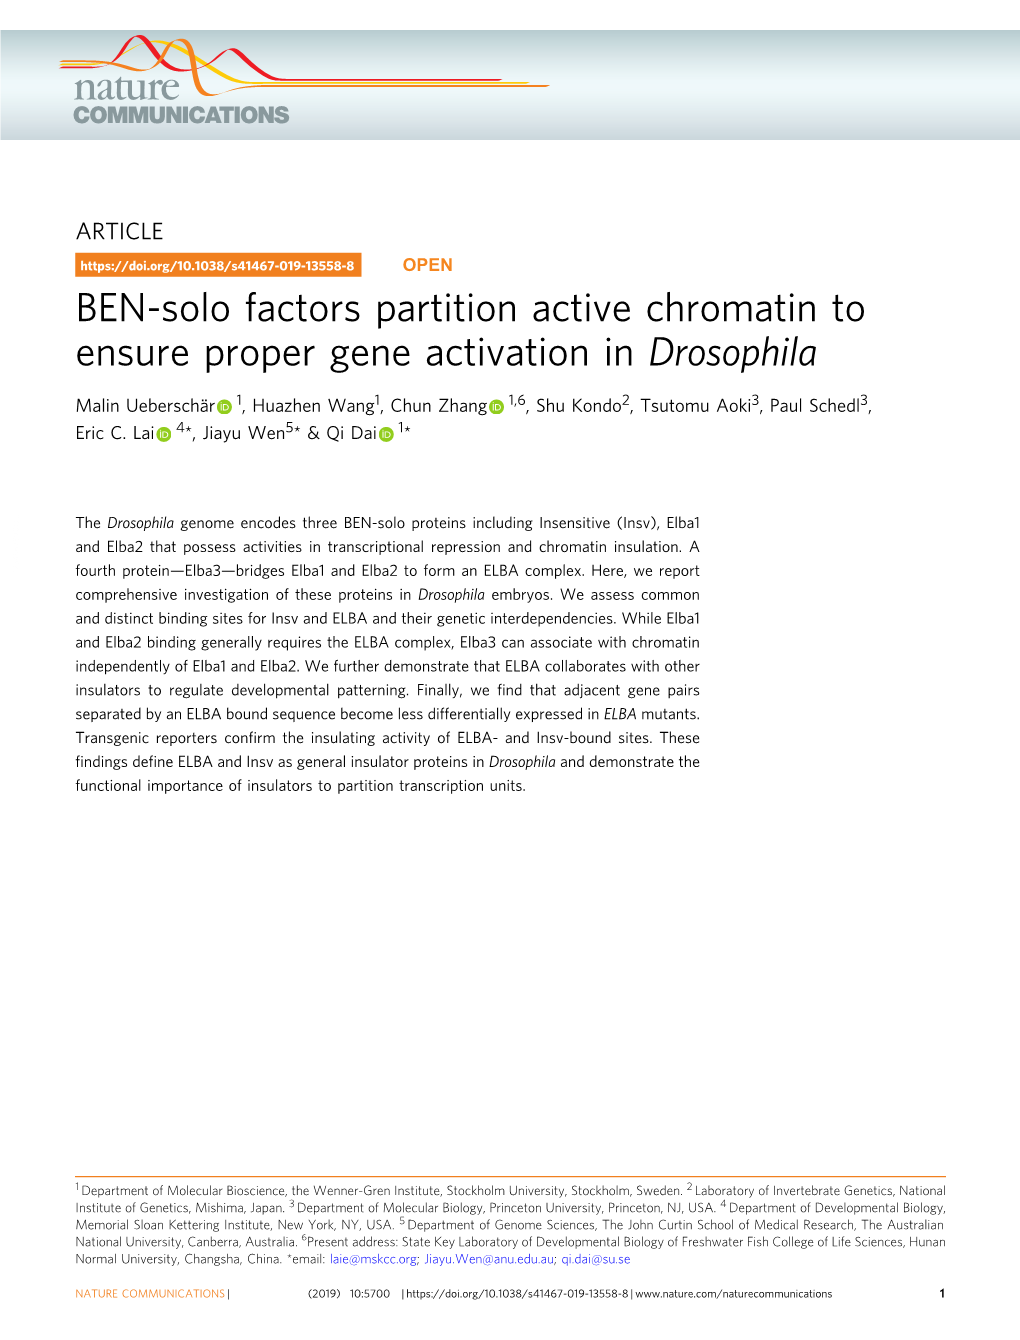 BEN-Solo Factors Partition Active Chromatin to Ensure Proper Gene Activation in Drosophila